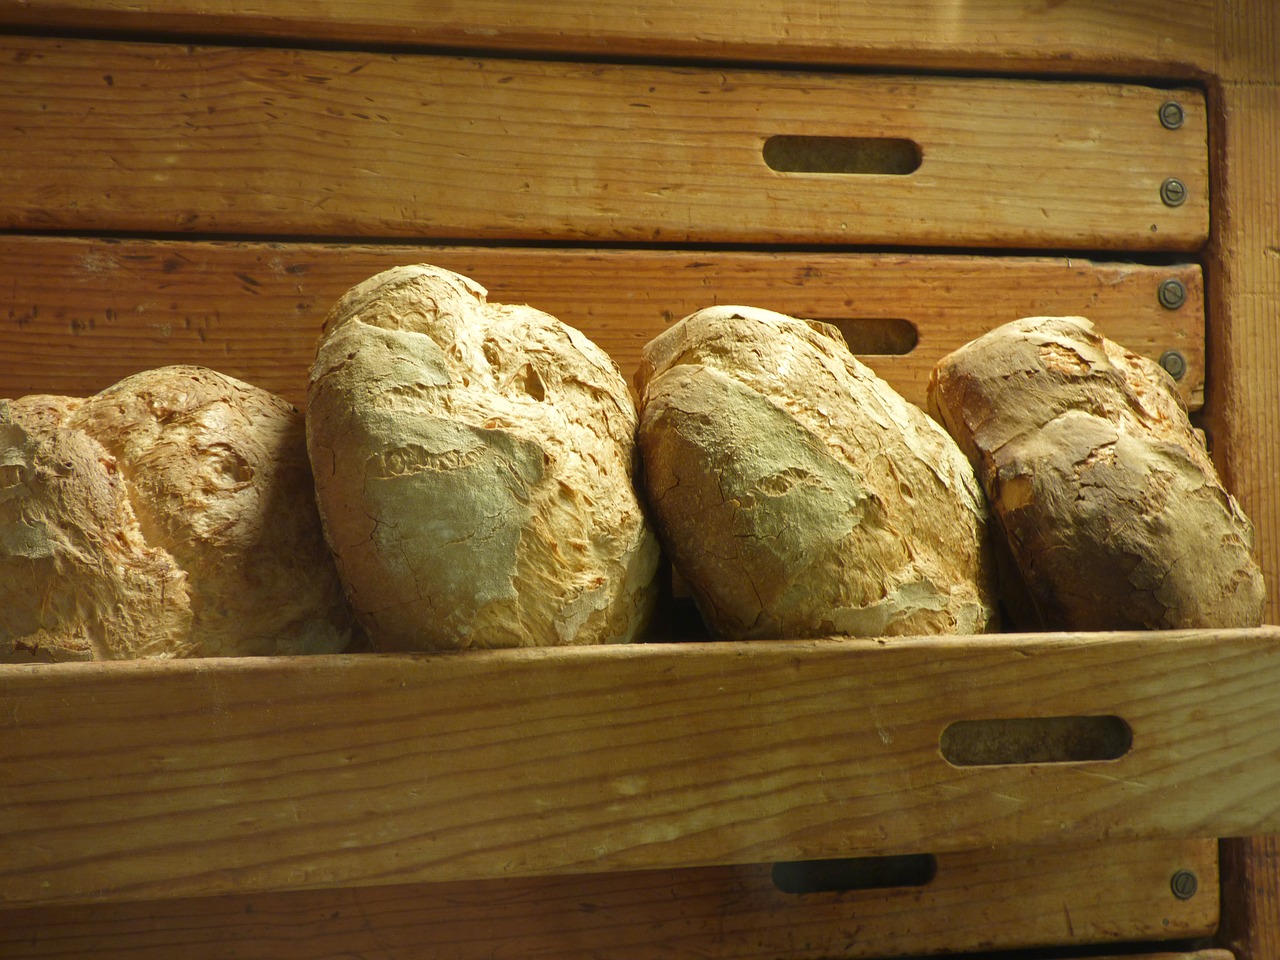 receptura na chleb wiejski